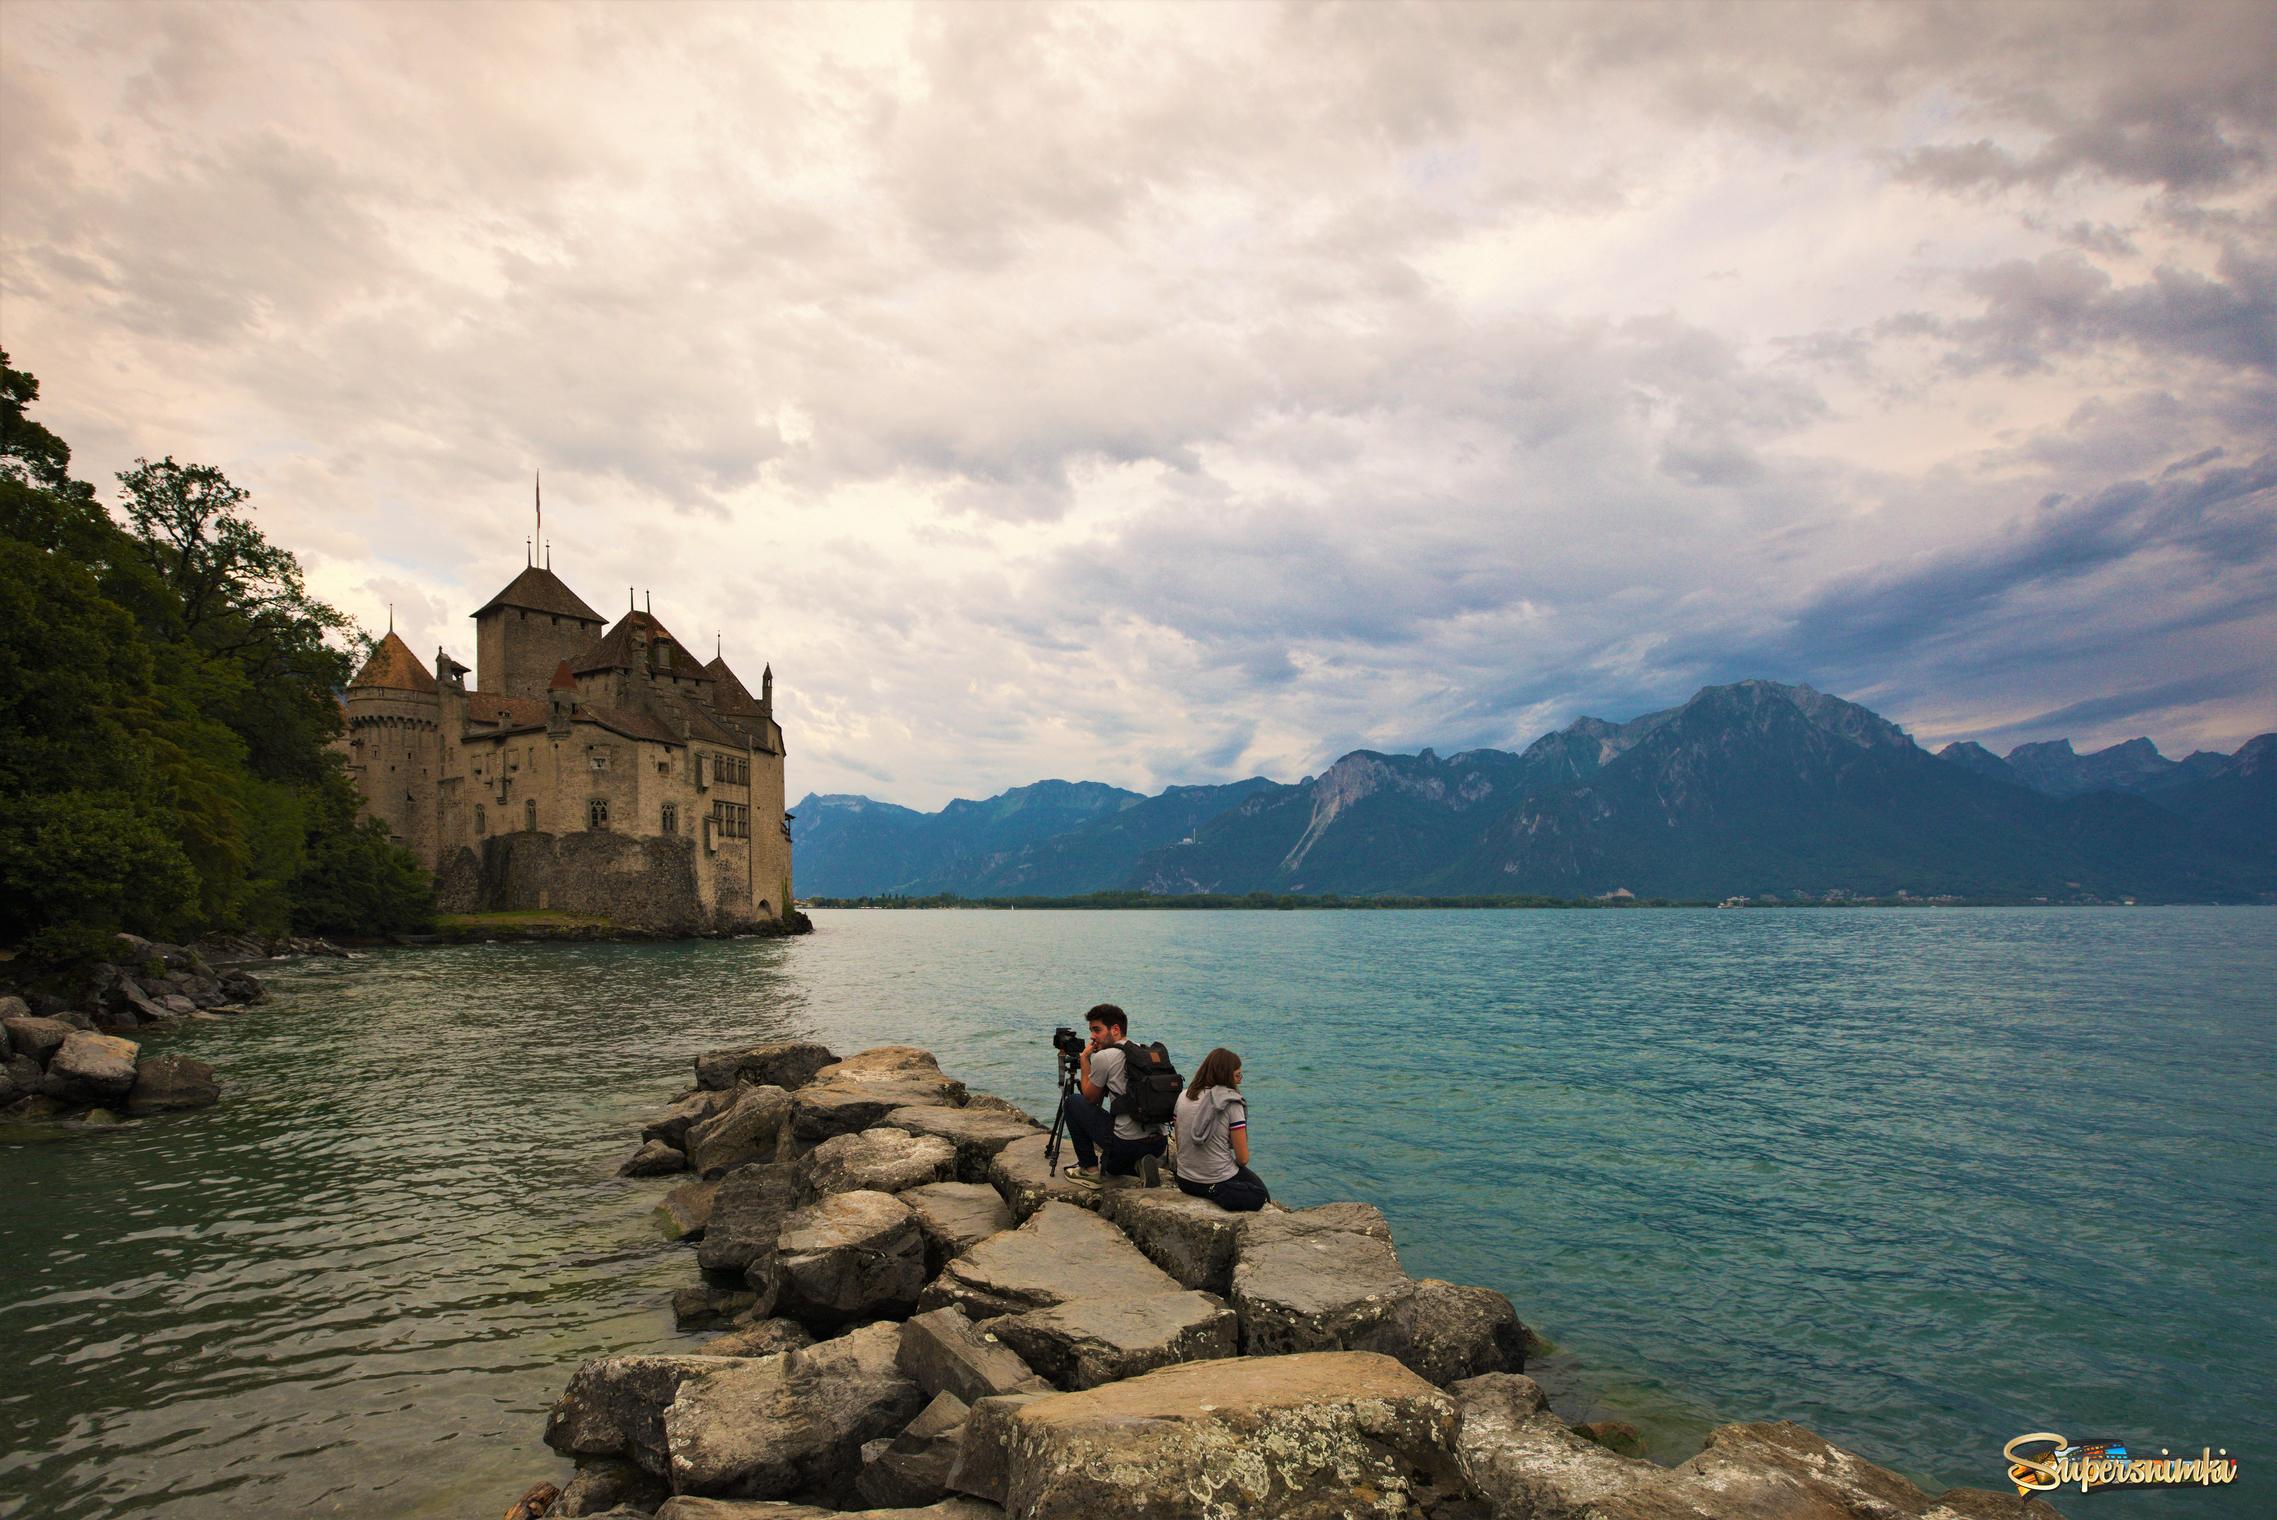   Замок  Shilon  на берегу  Женевского озера......